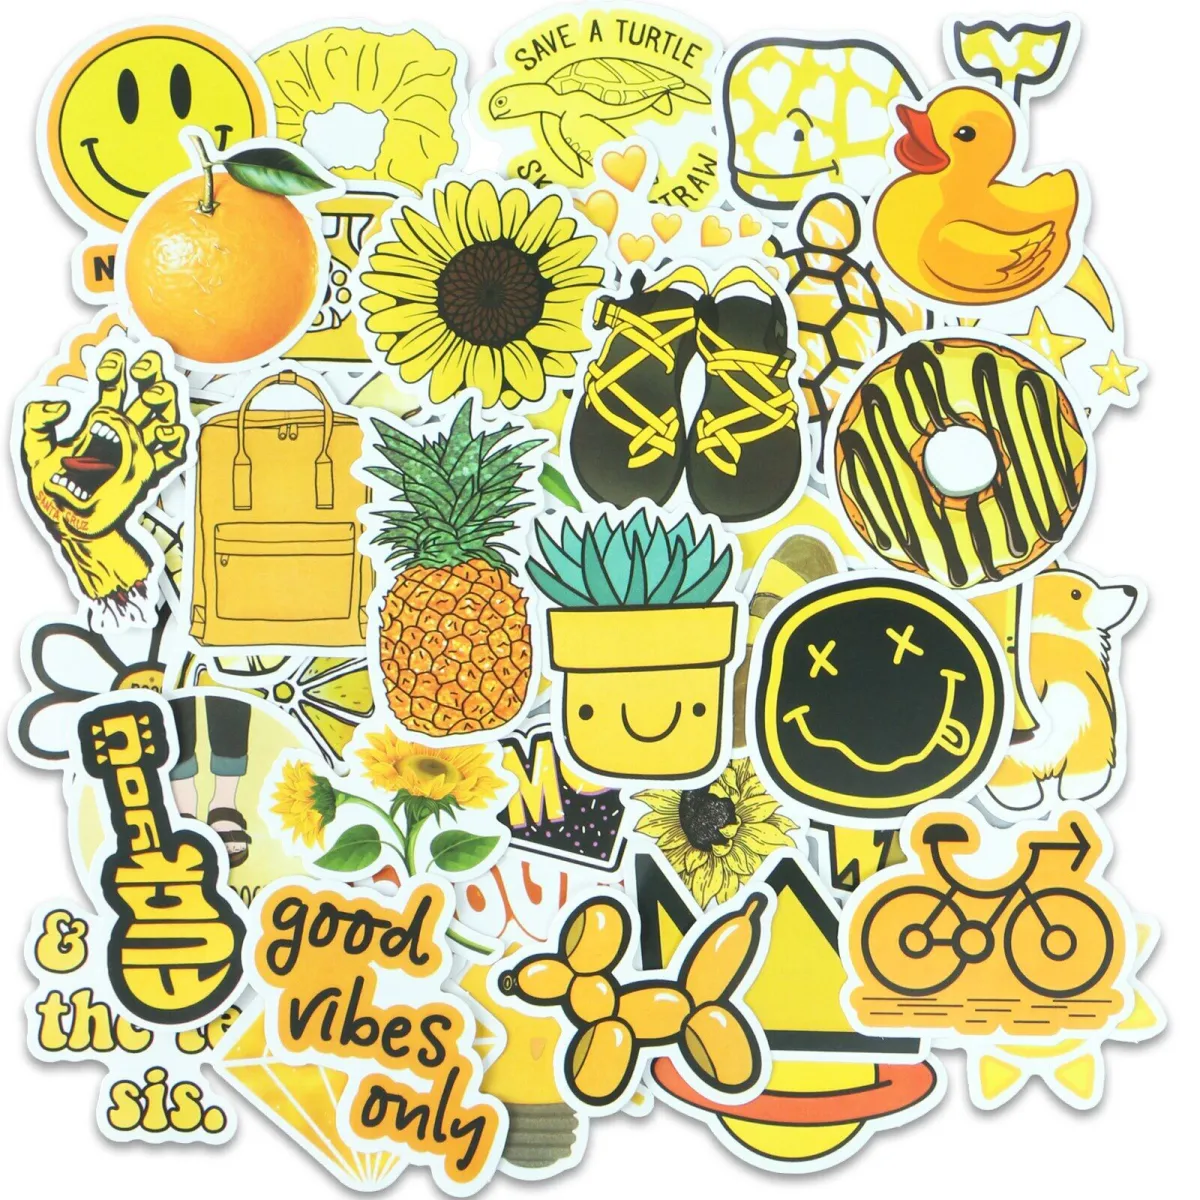 Big Moods Aesthetic Sticker Pack 10pc - Yellow